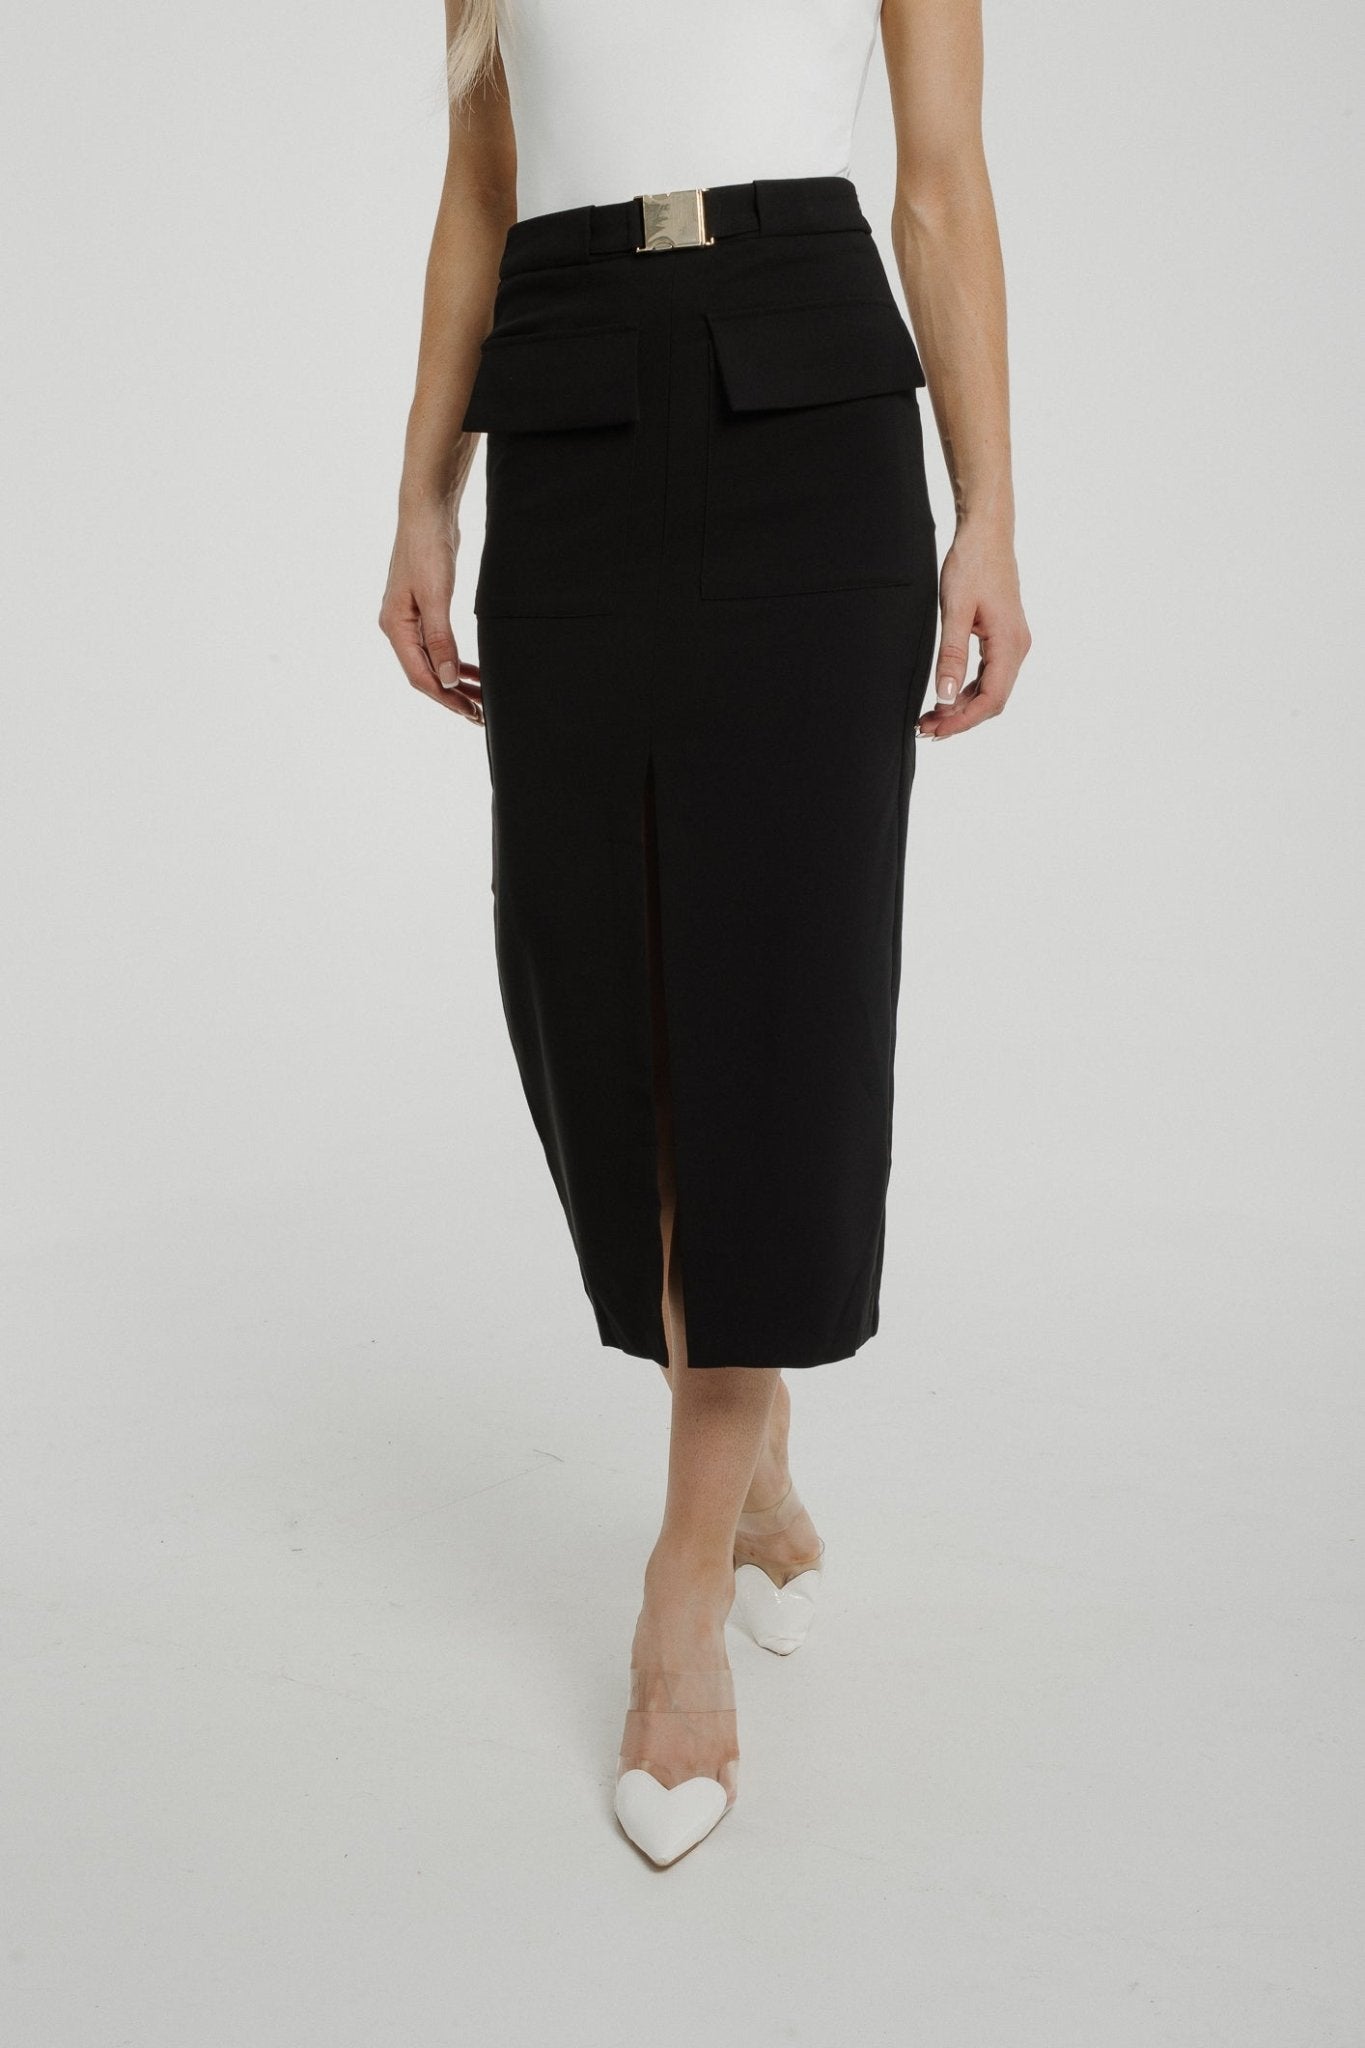 Freya Gold Buckle Pencil Skirt In Black - The Walk in Wardrobe